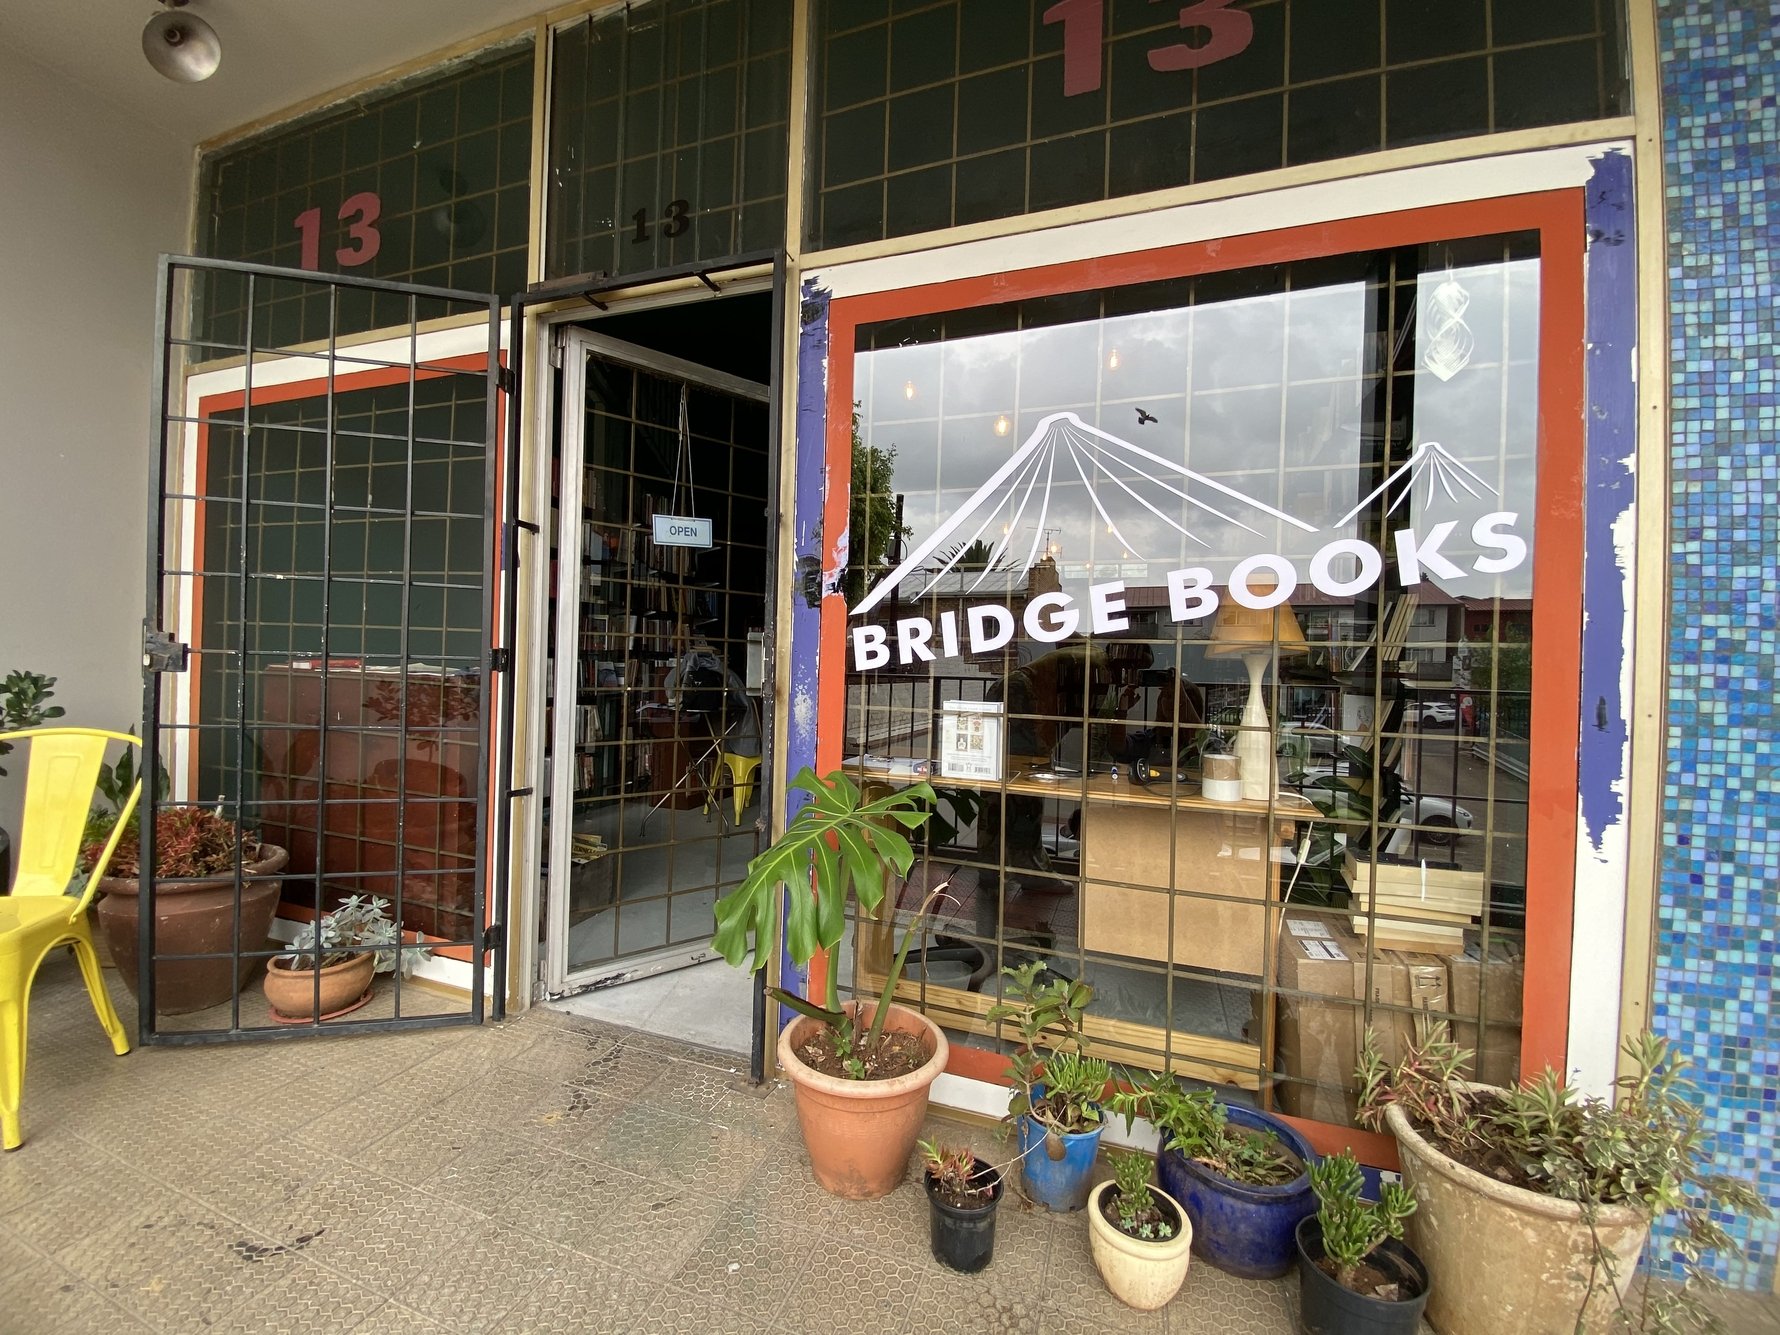 Welcome to Bridge Books' friendly new Linden space. Photo: Bridge Books.